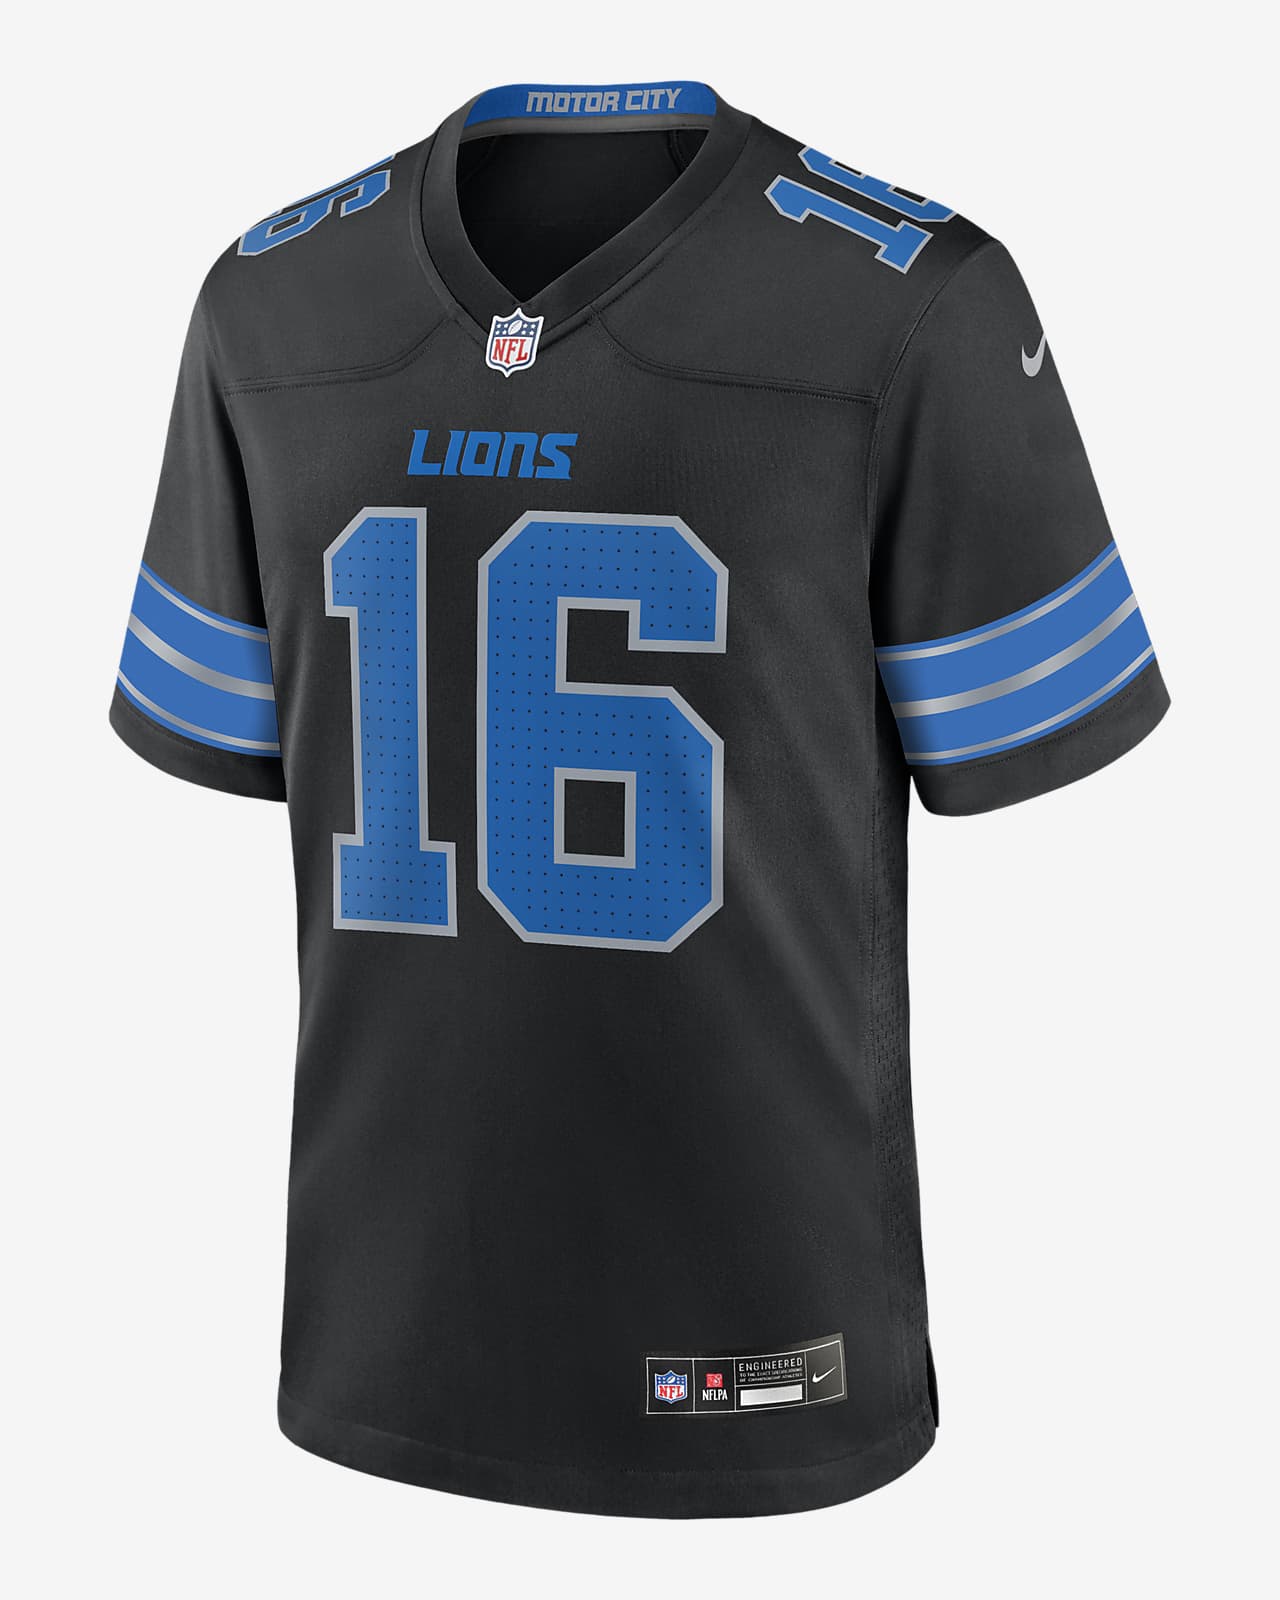 Jersey de fútbol americano Nike de la NFL Game para hombre Jared Goff Detroit Lions